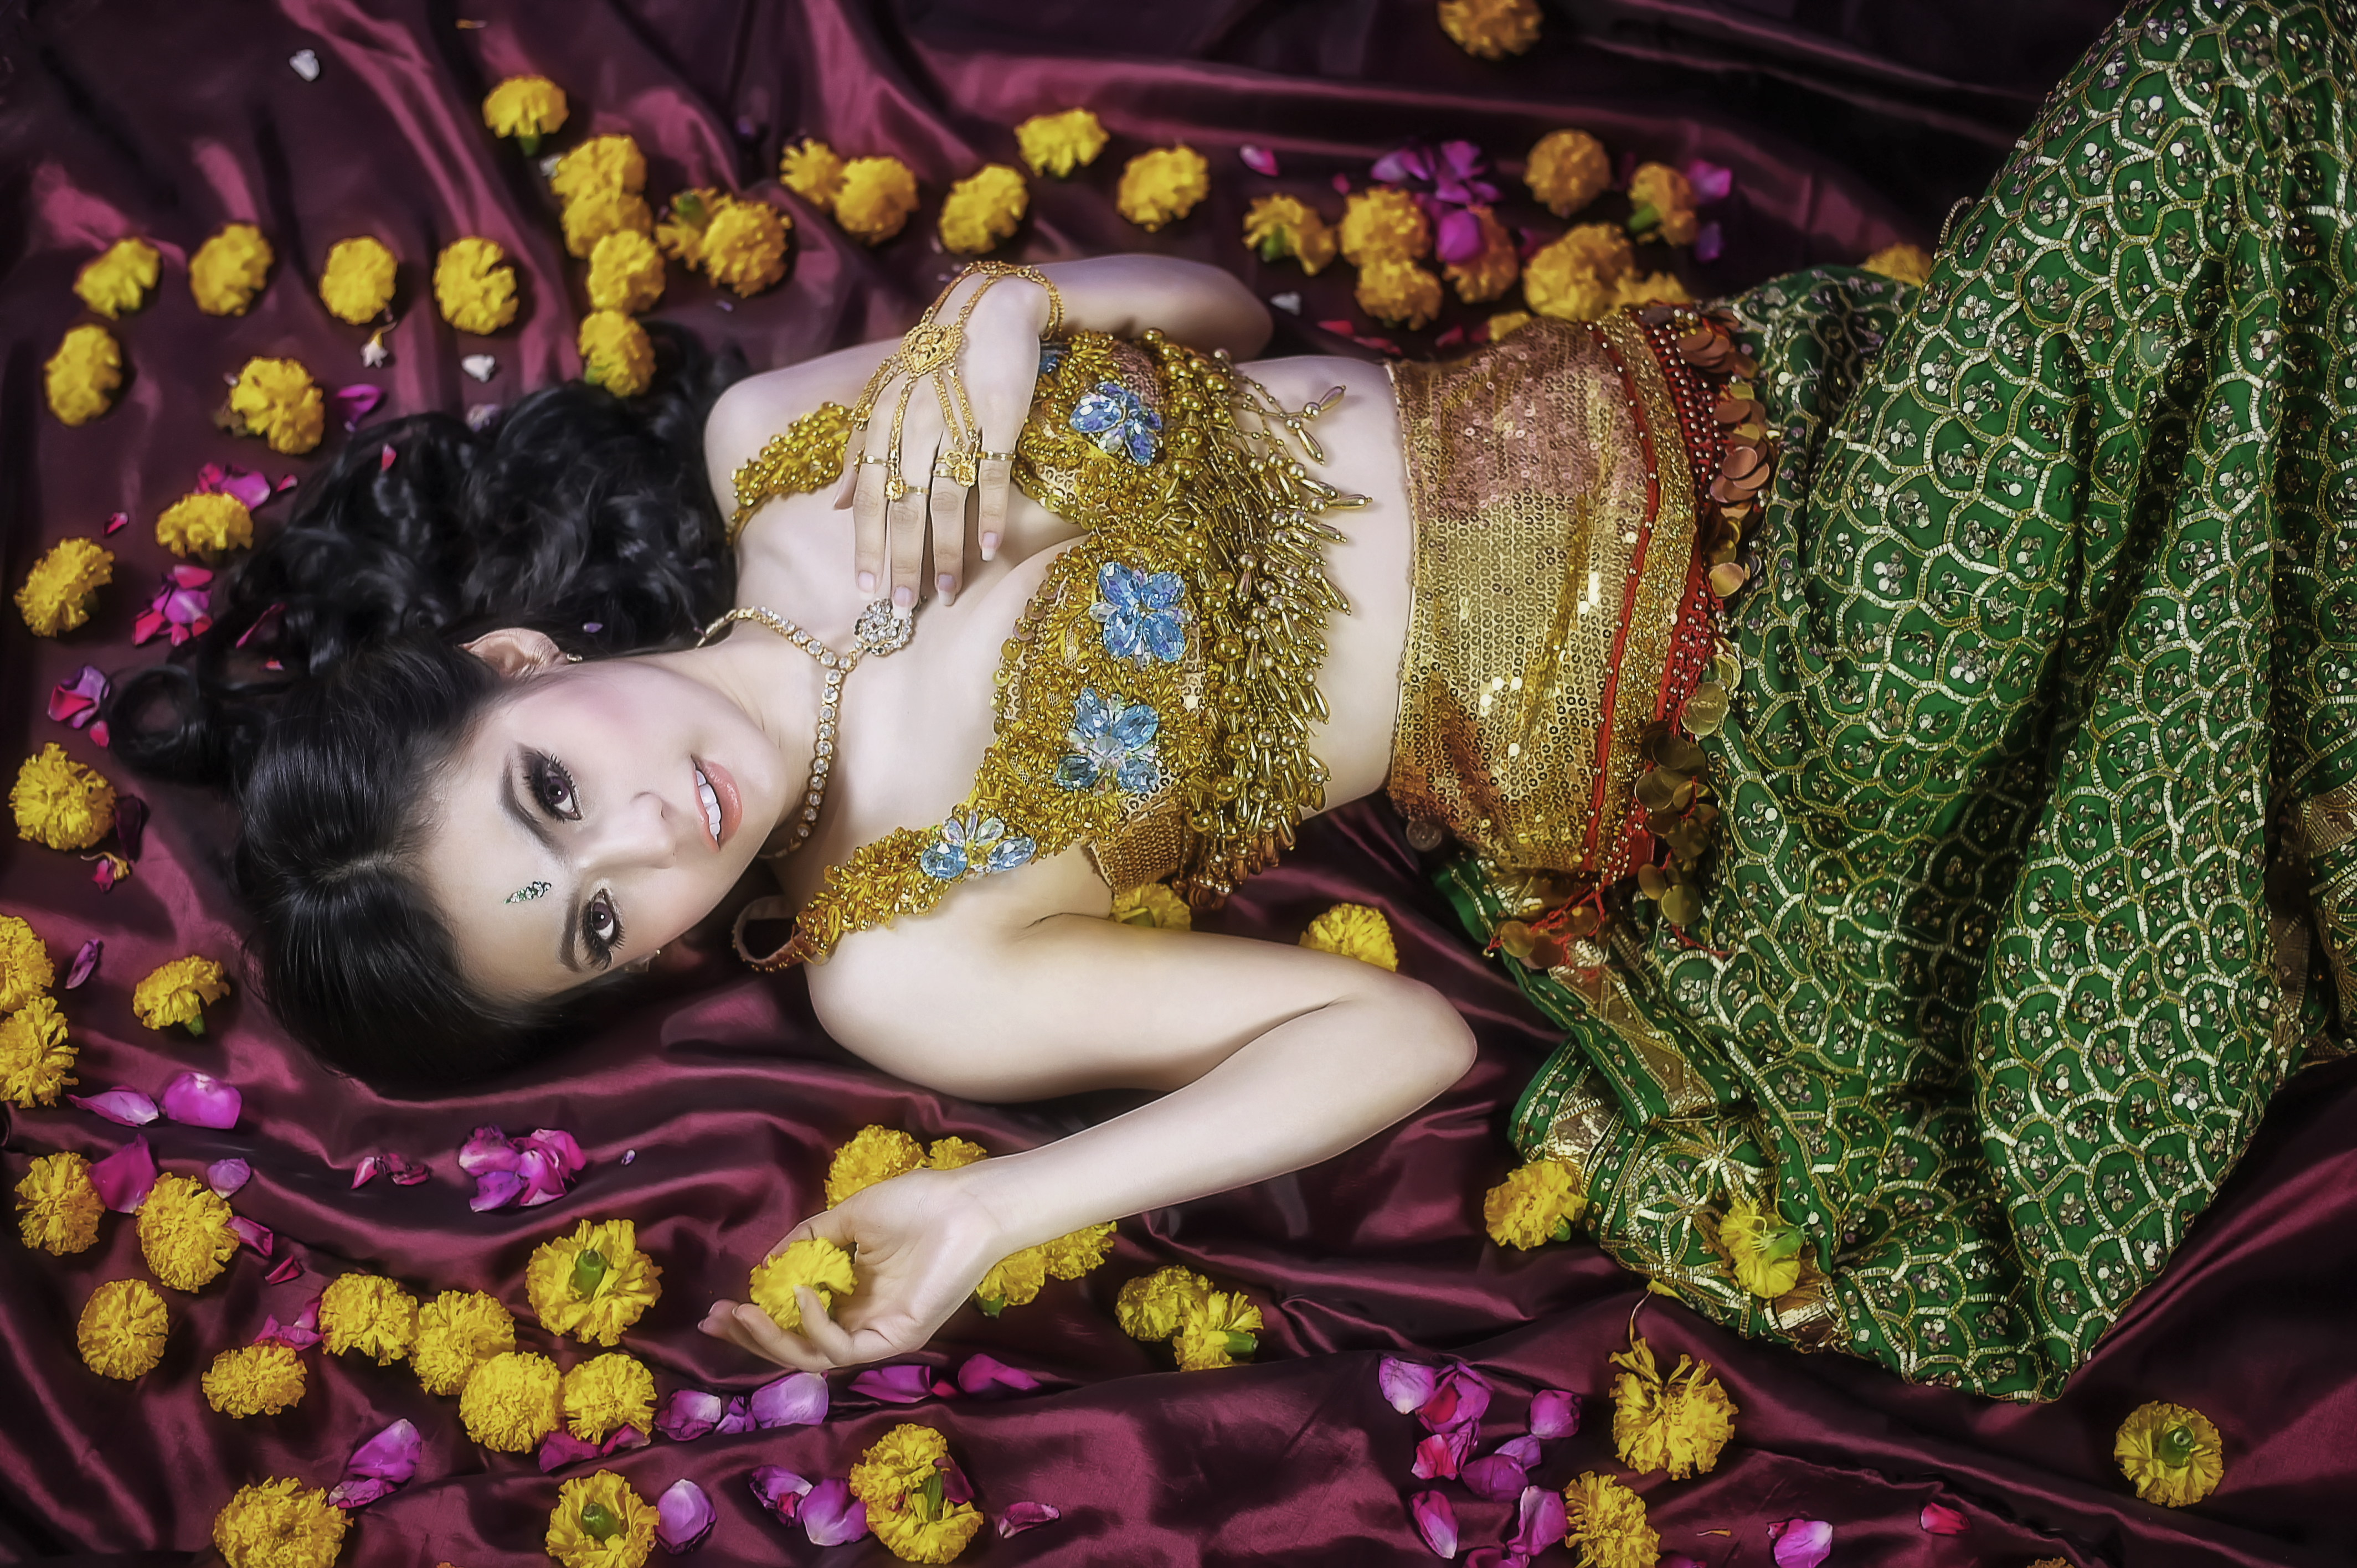 Bracelet Flower Girl Gold Dress Necklace Thai Traditional Costume Woman 4256x2832